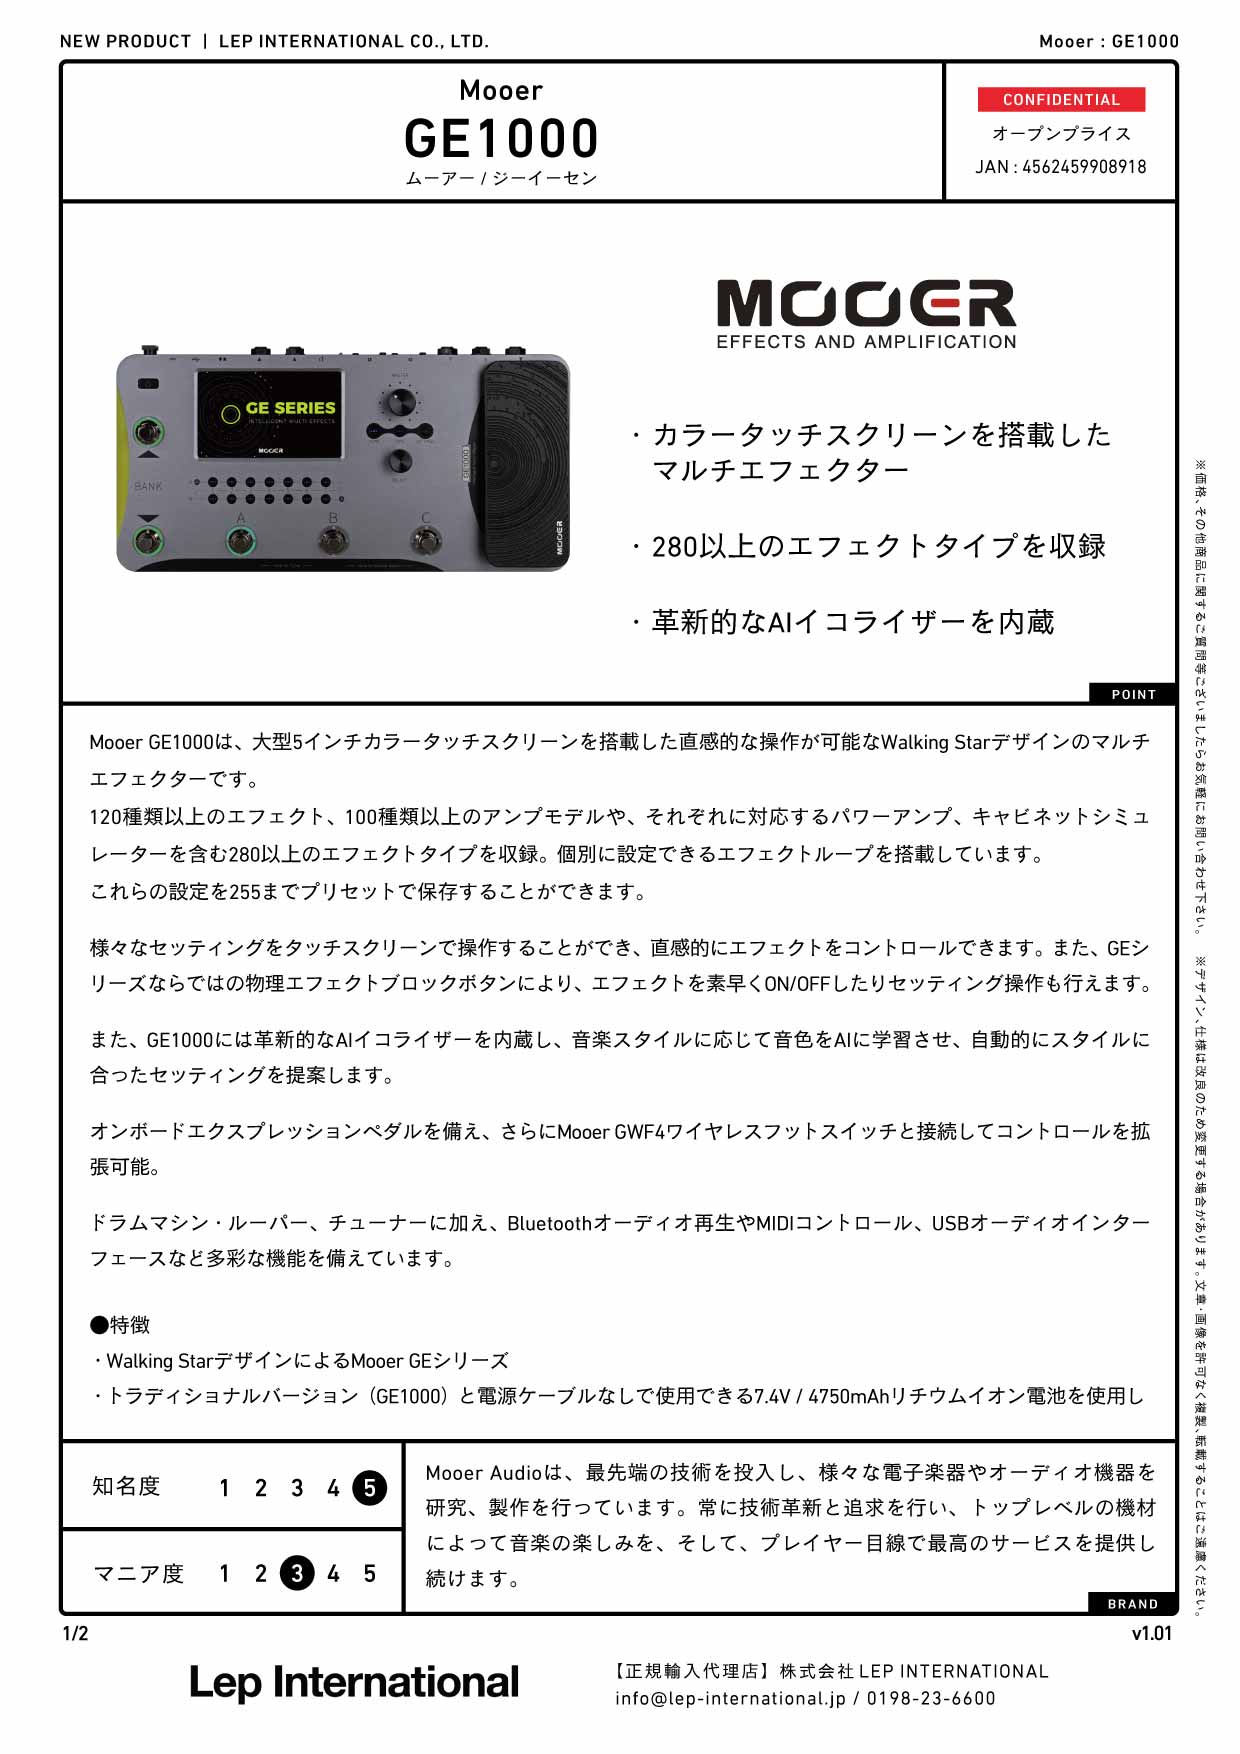 Mooer / GE1000Li